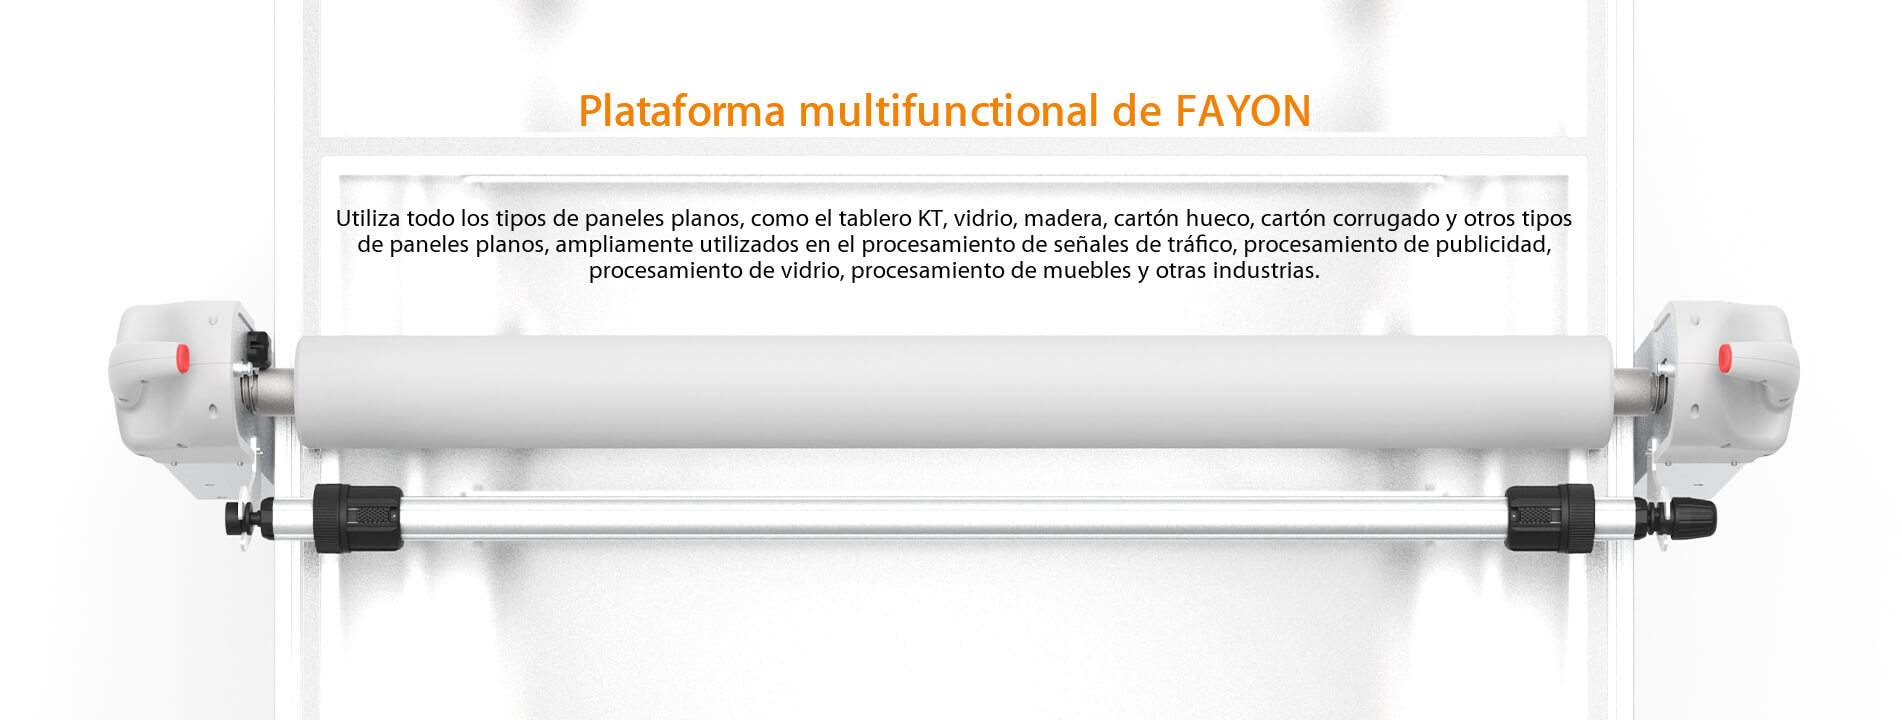 Plataforma multifunctional de FAYON